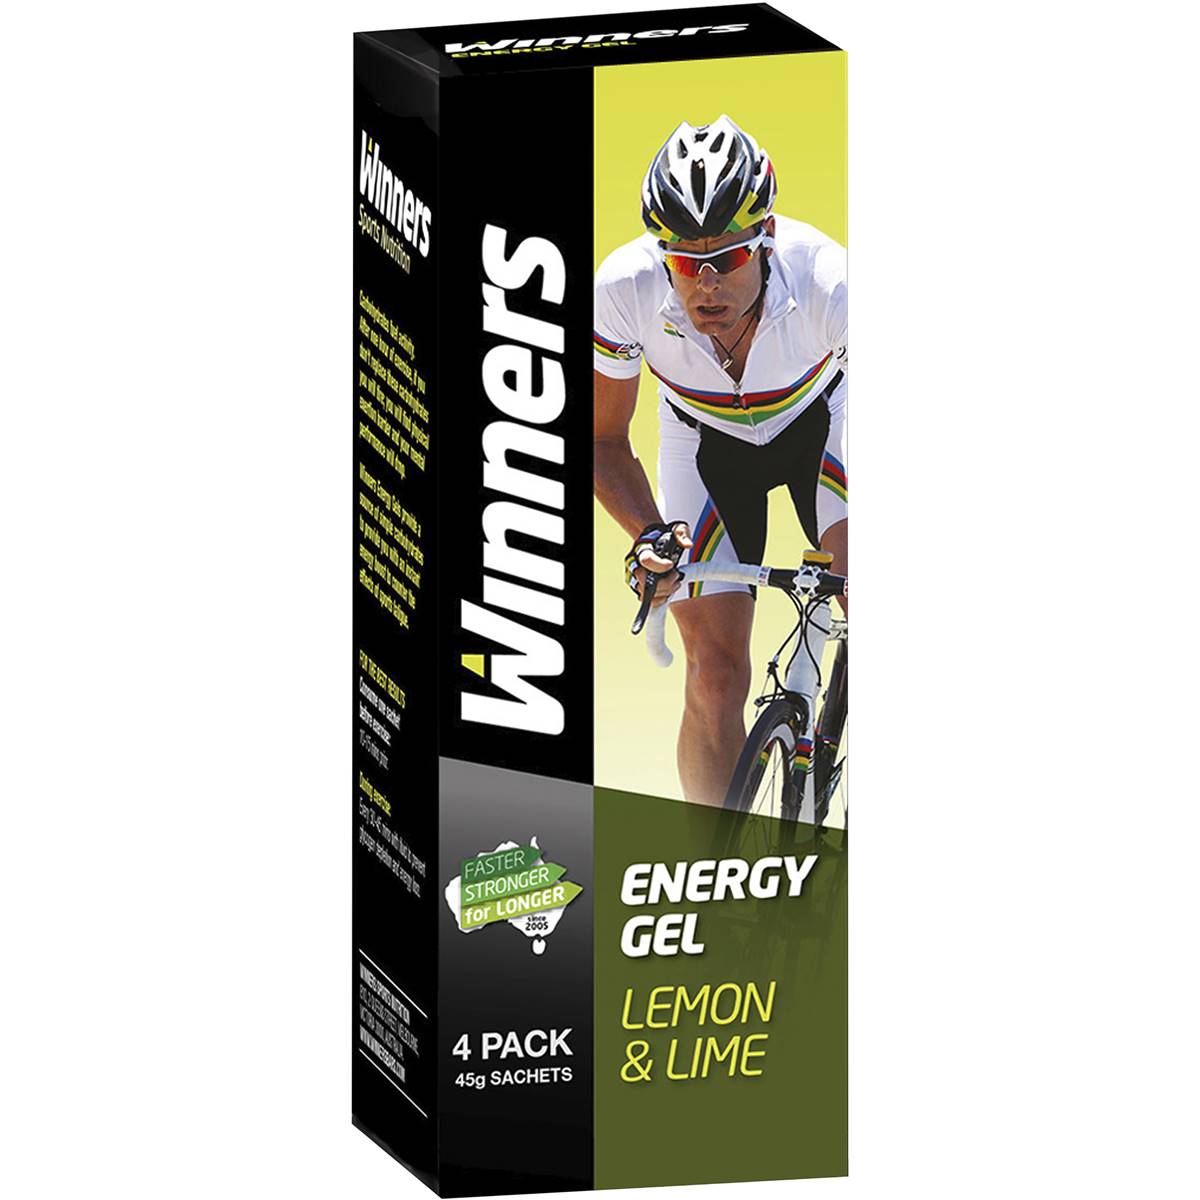 Calories in Winners Sports Nutrition Energy Gel Lemon & Lime